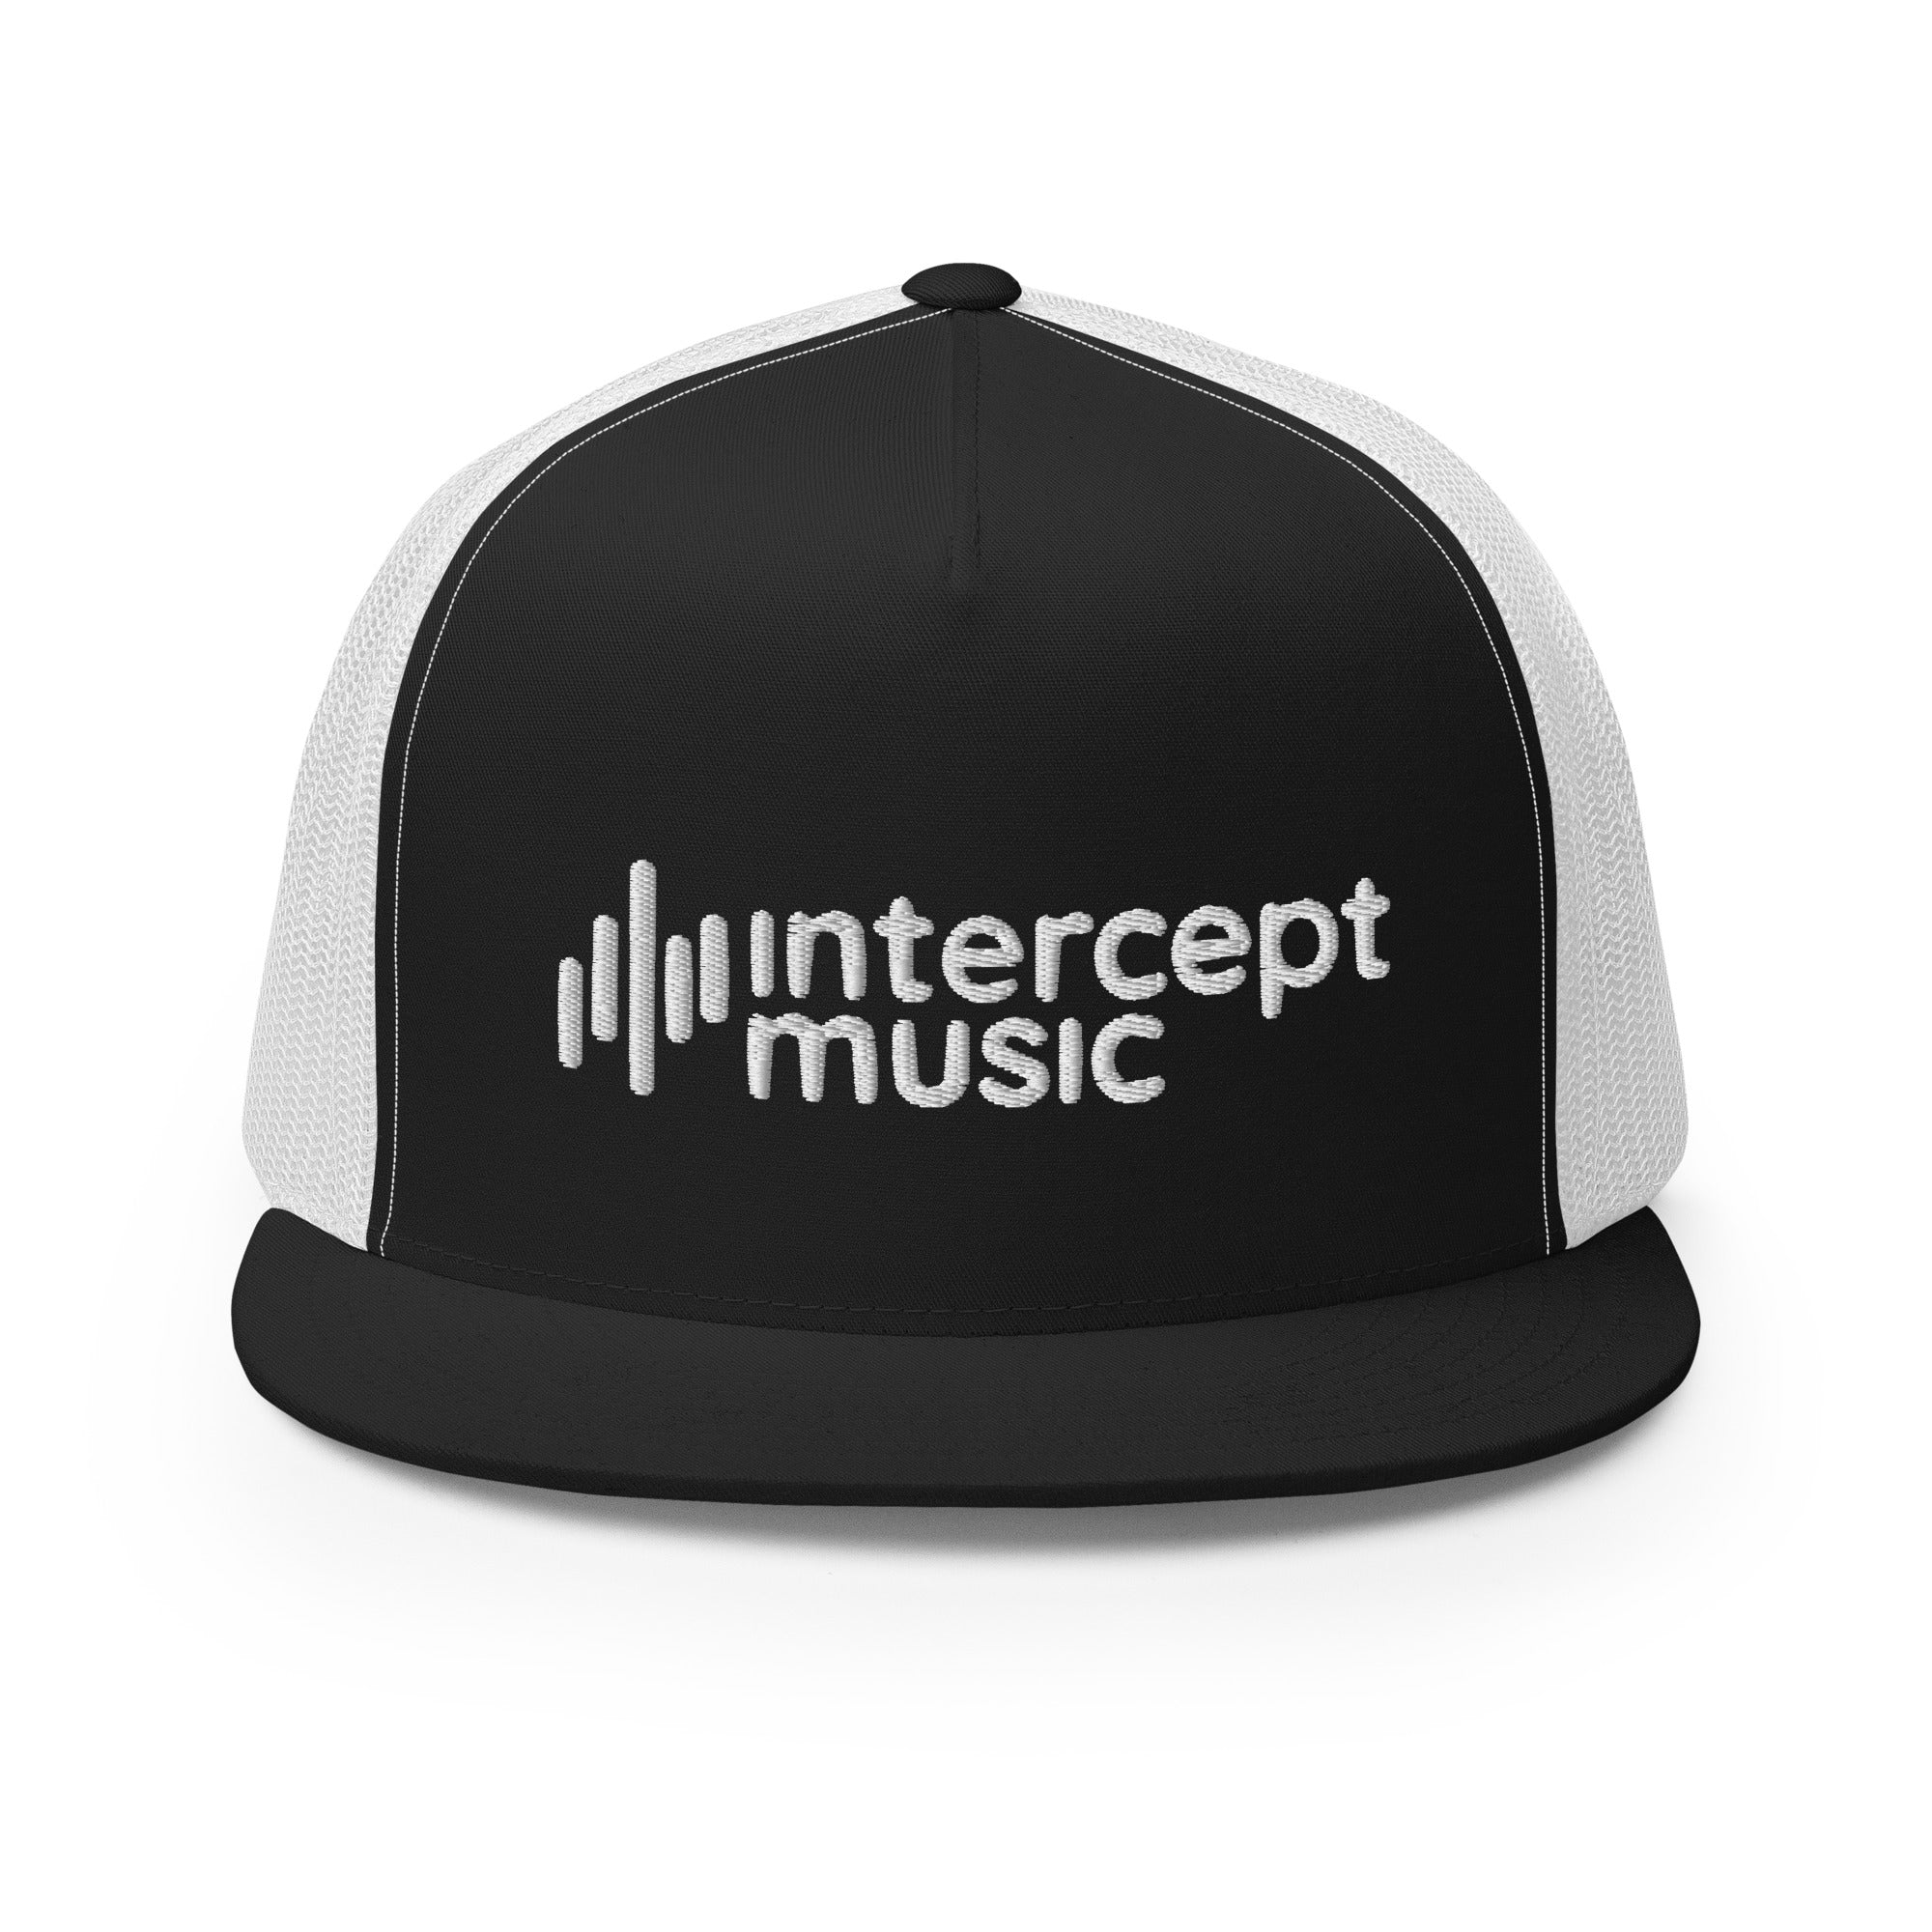 Intercept Music - Trucker Cap